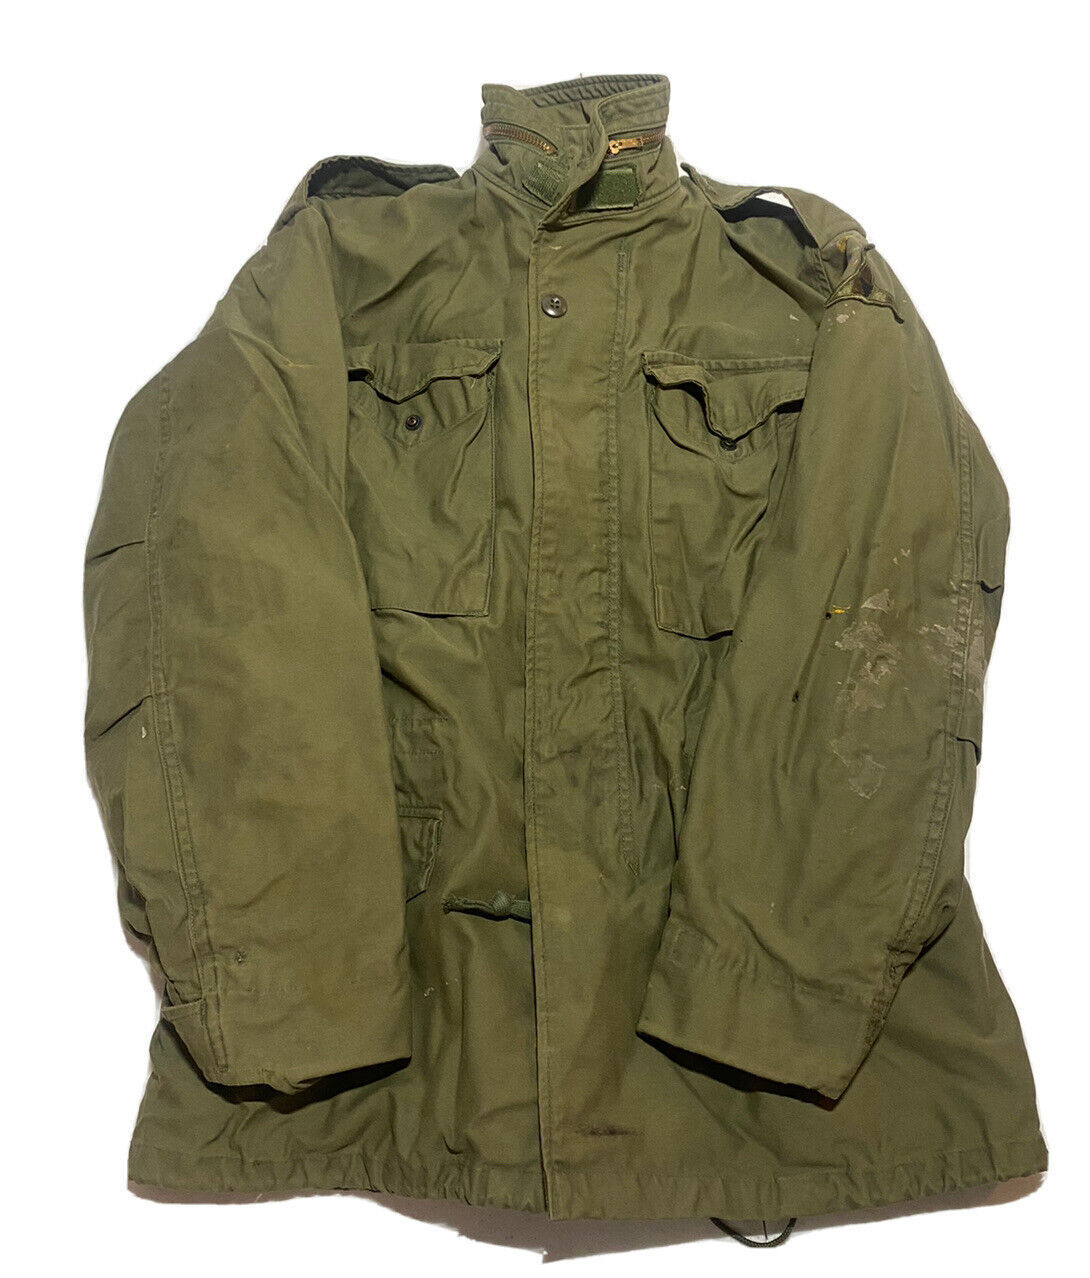 Vintage Us Military M-65 Field Jacket Size Small Regular Green Vietnam Era 70s